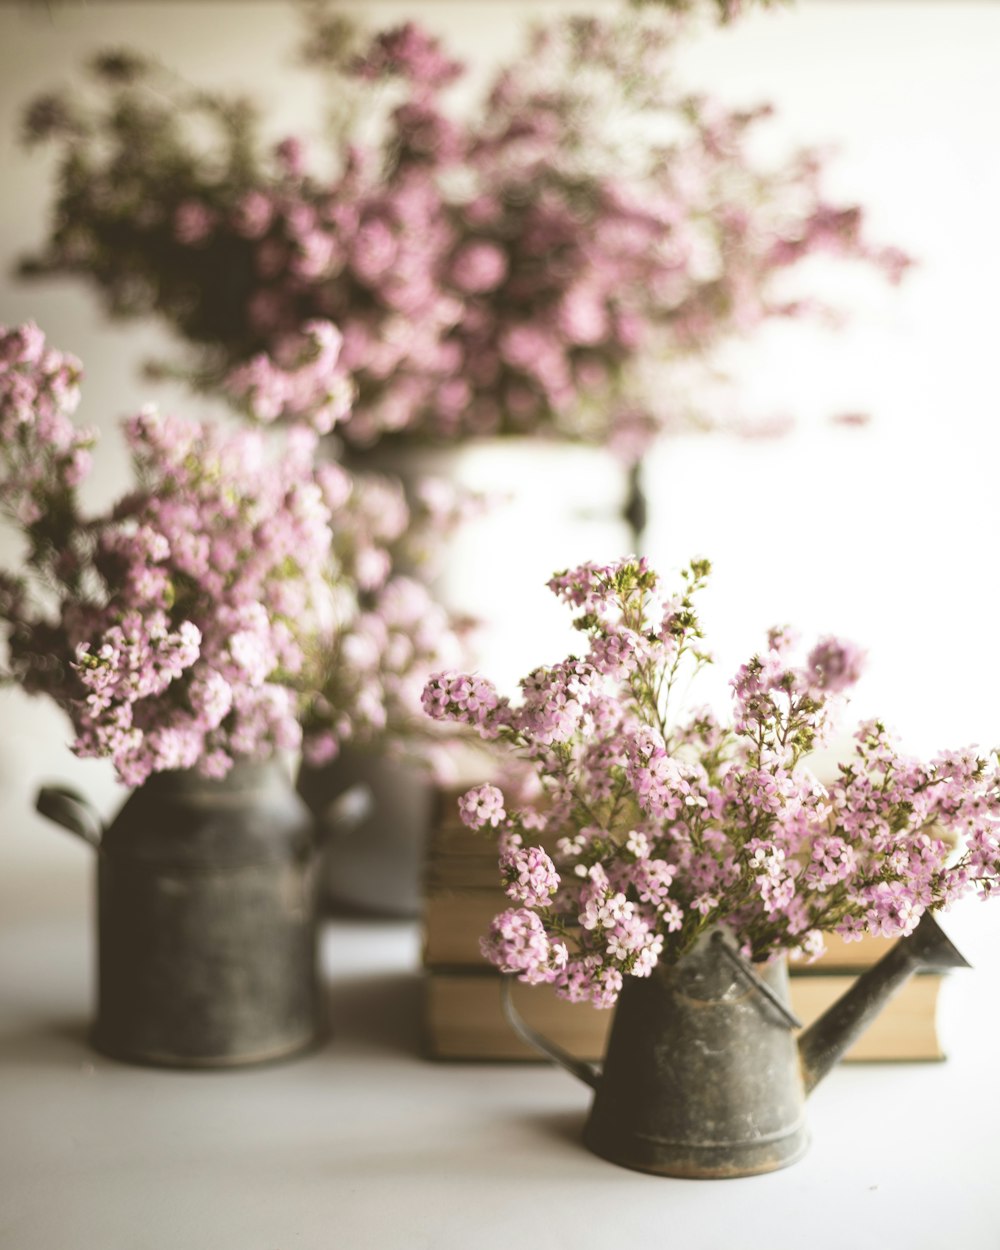 flores cor-de-rosa e brancas no vaso cerâmico cinzento